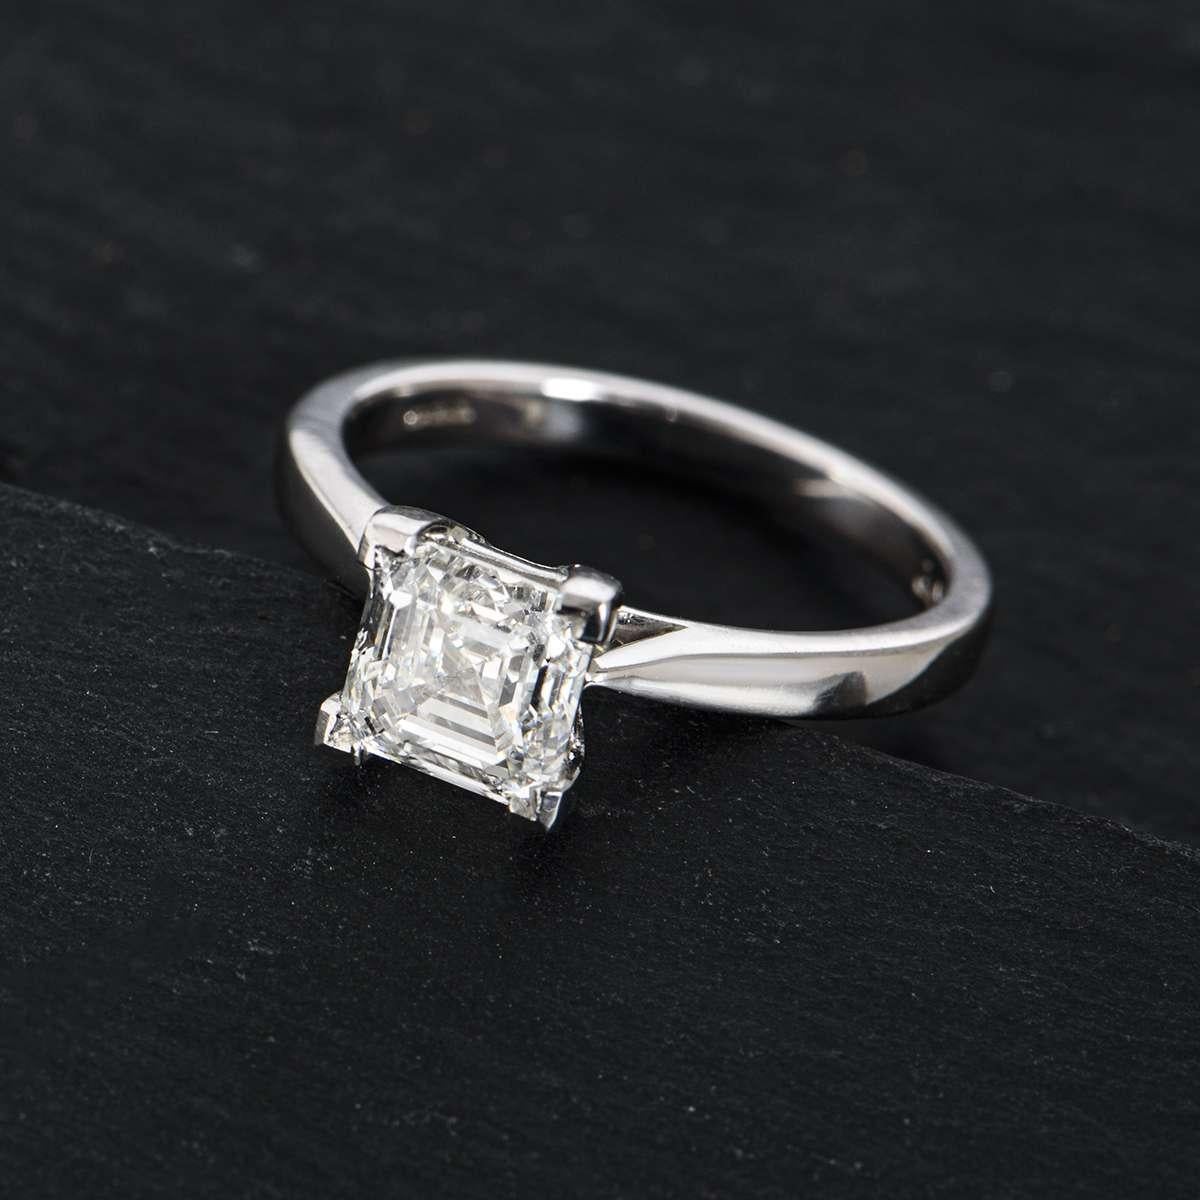 18k White Gold Asscher Cut Diamond Ring 1.58ct G/VS1 For Sale 1